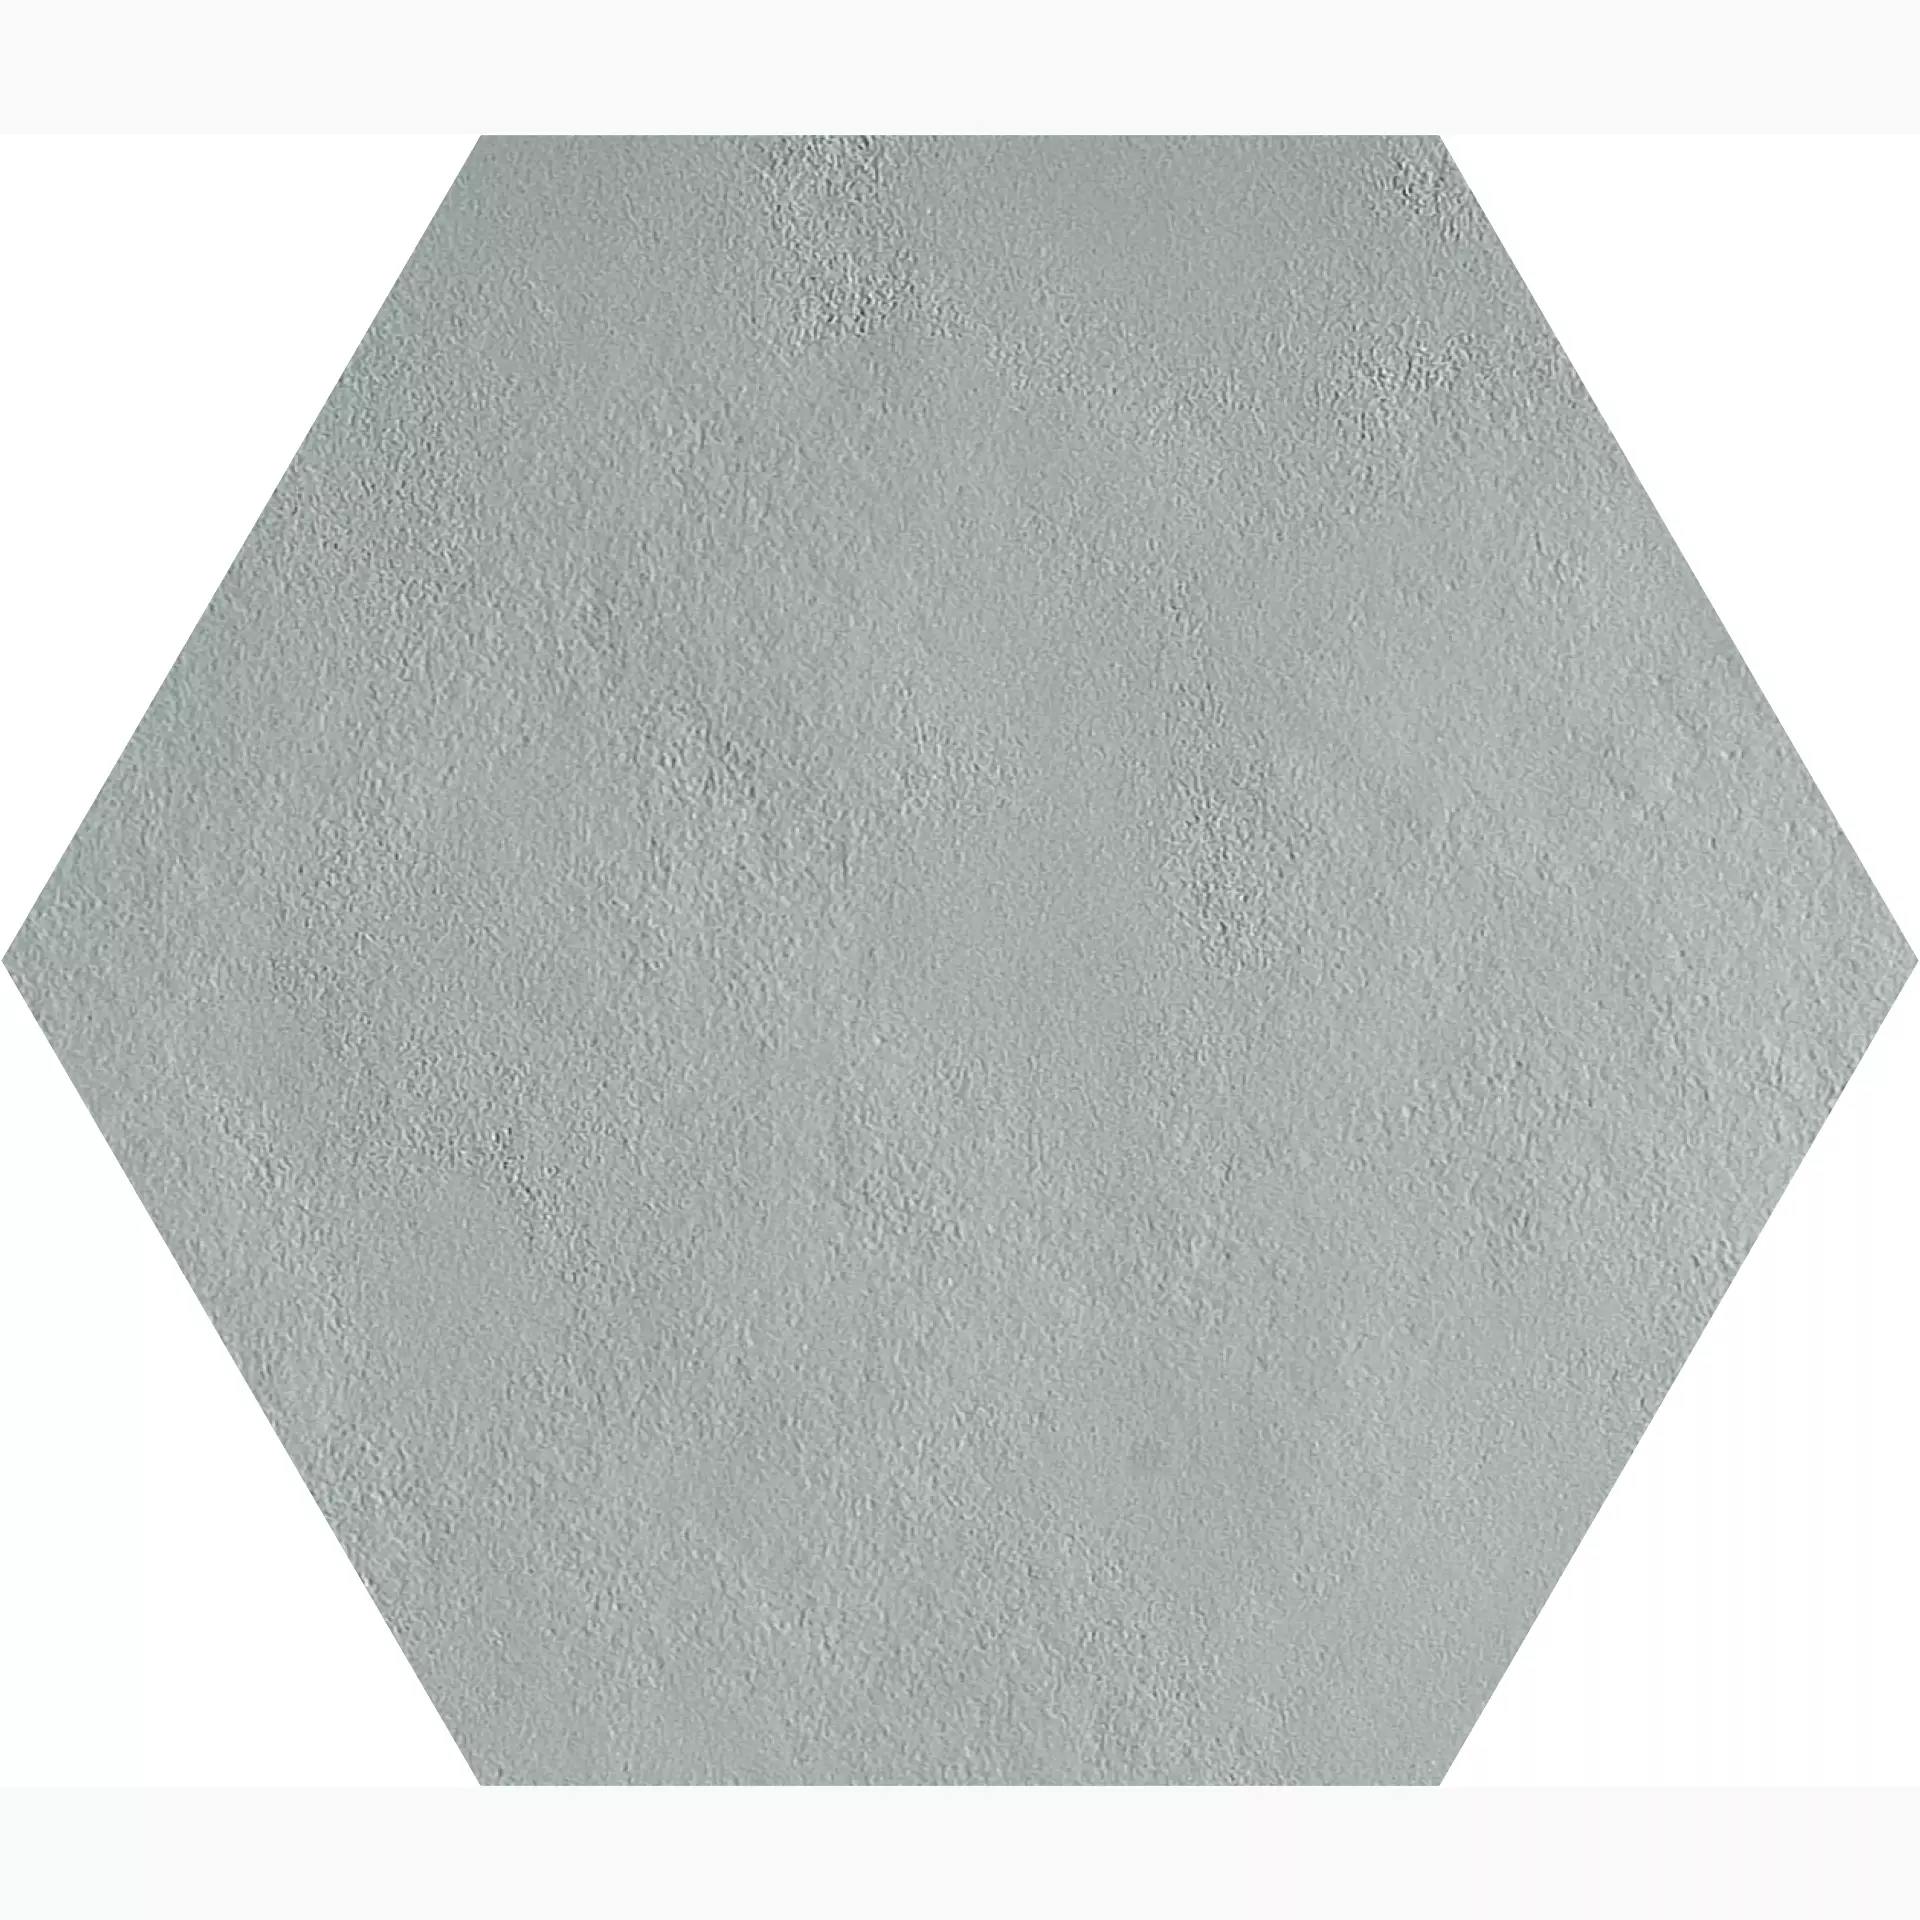 Gigacer Argilla Marine Material Decor Large Hexagon PO1818ESAMARINE 31x36cm 6mm